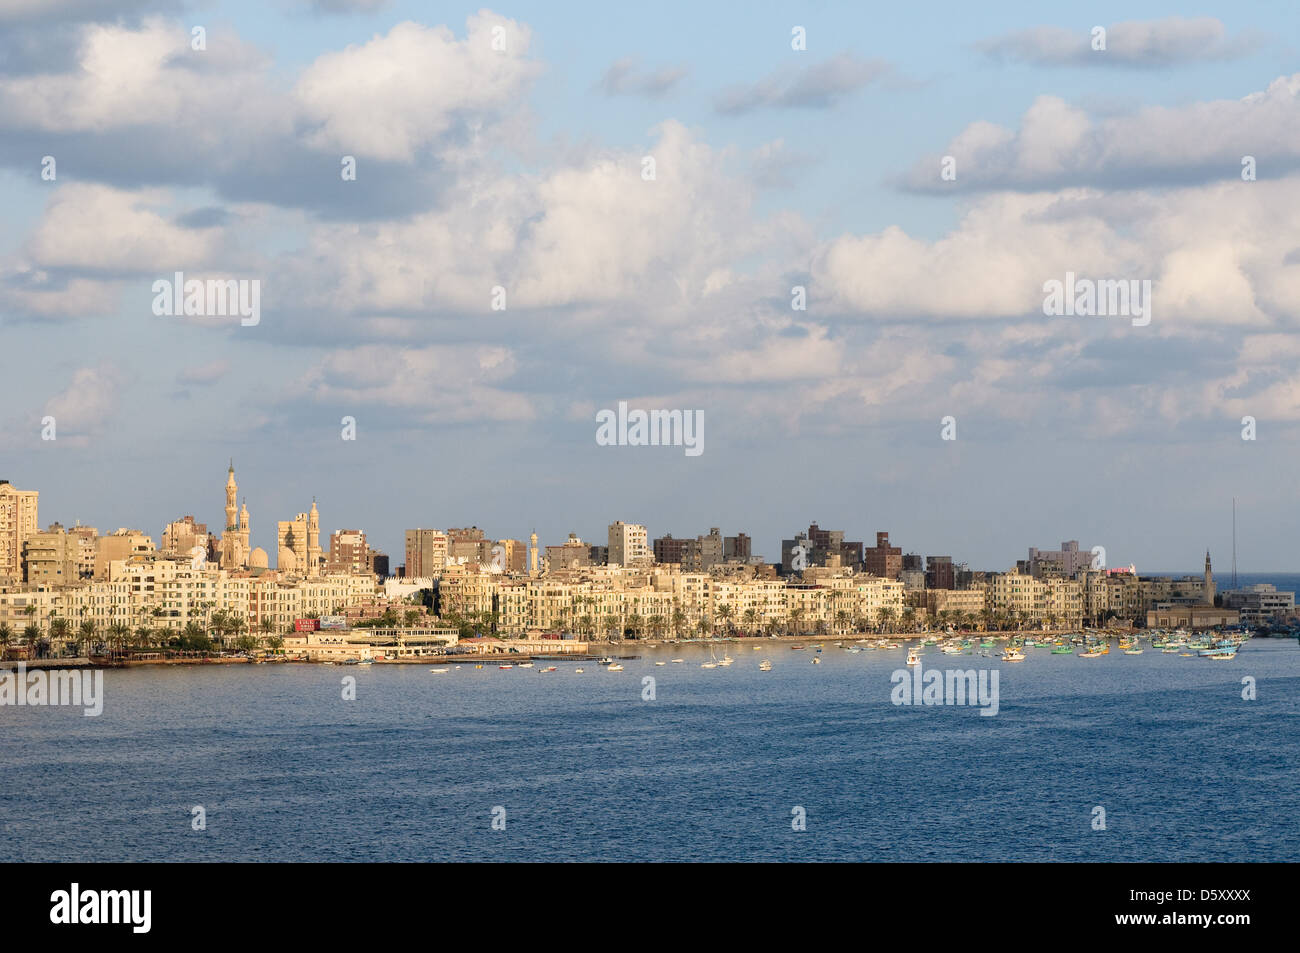 View of Alexandria harbor, Egypt Stock Photo